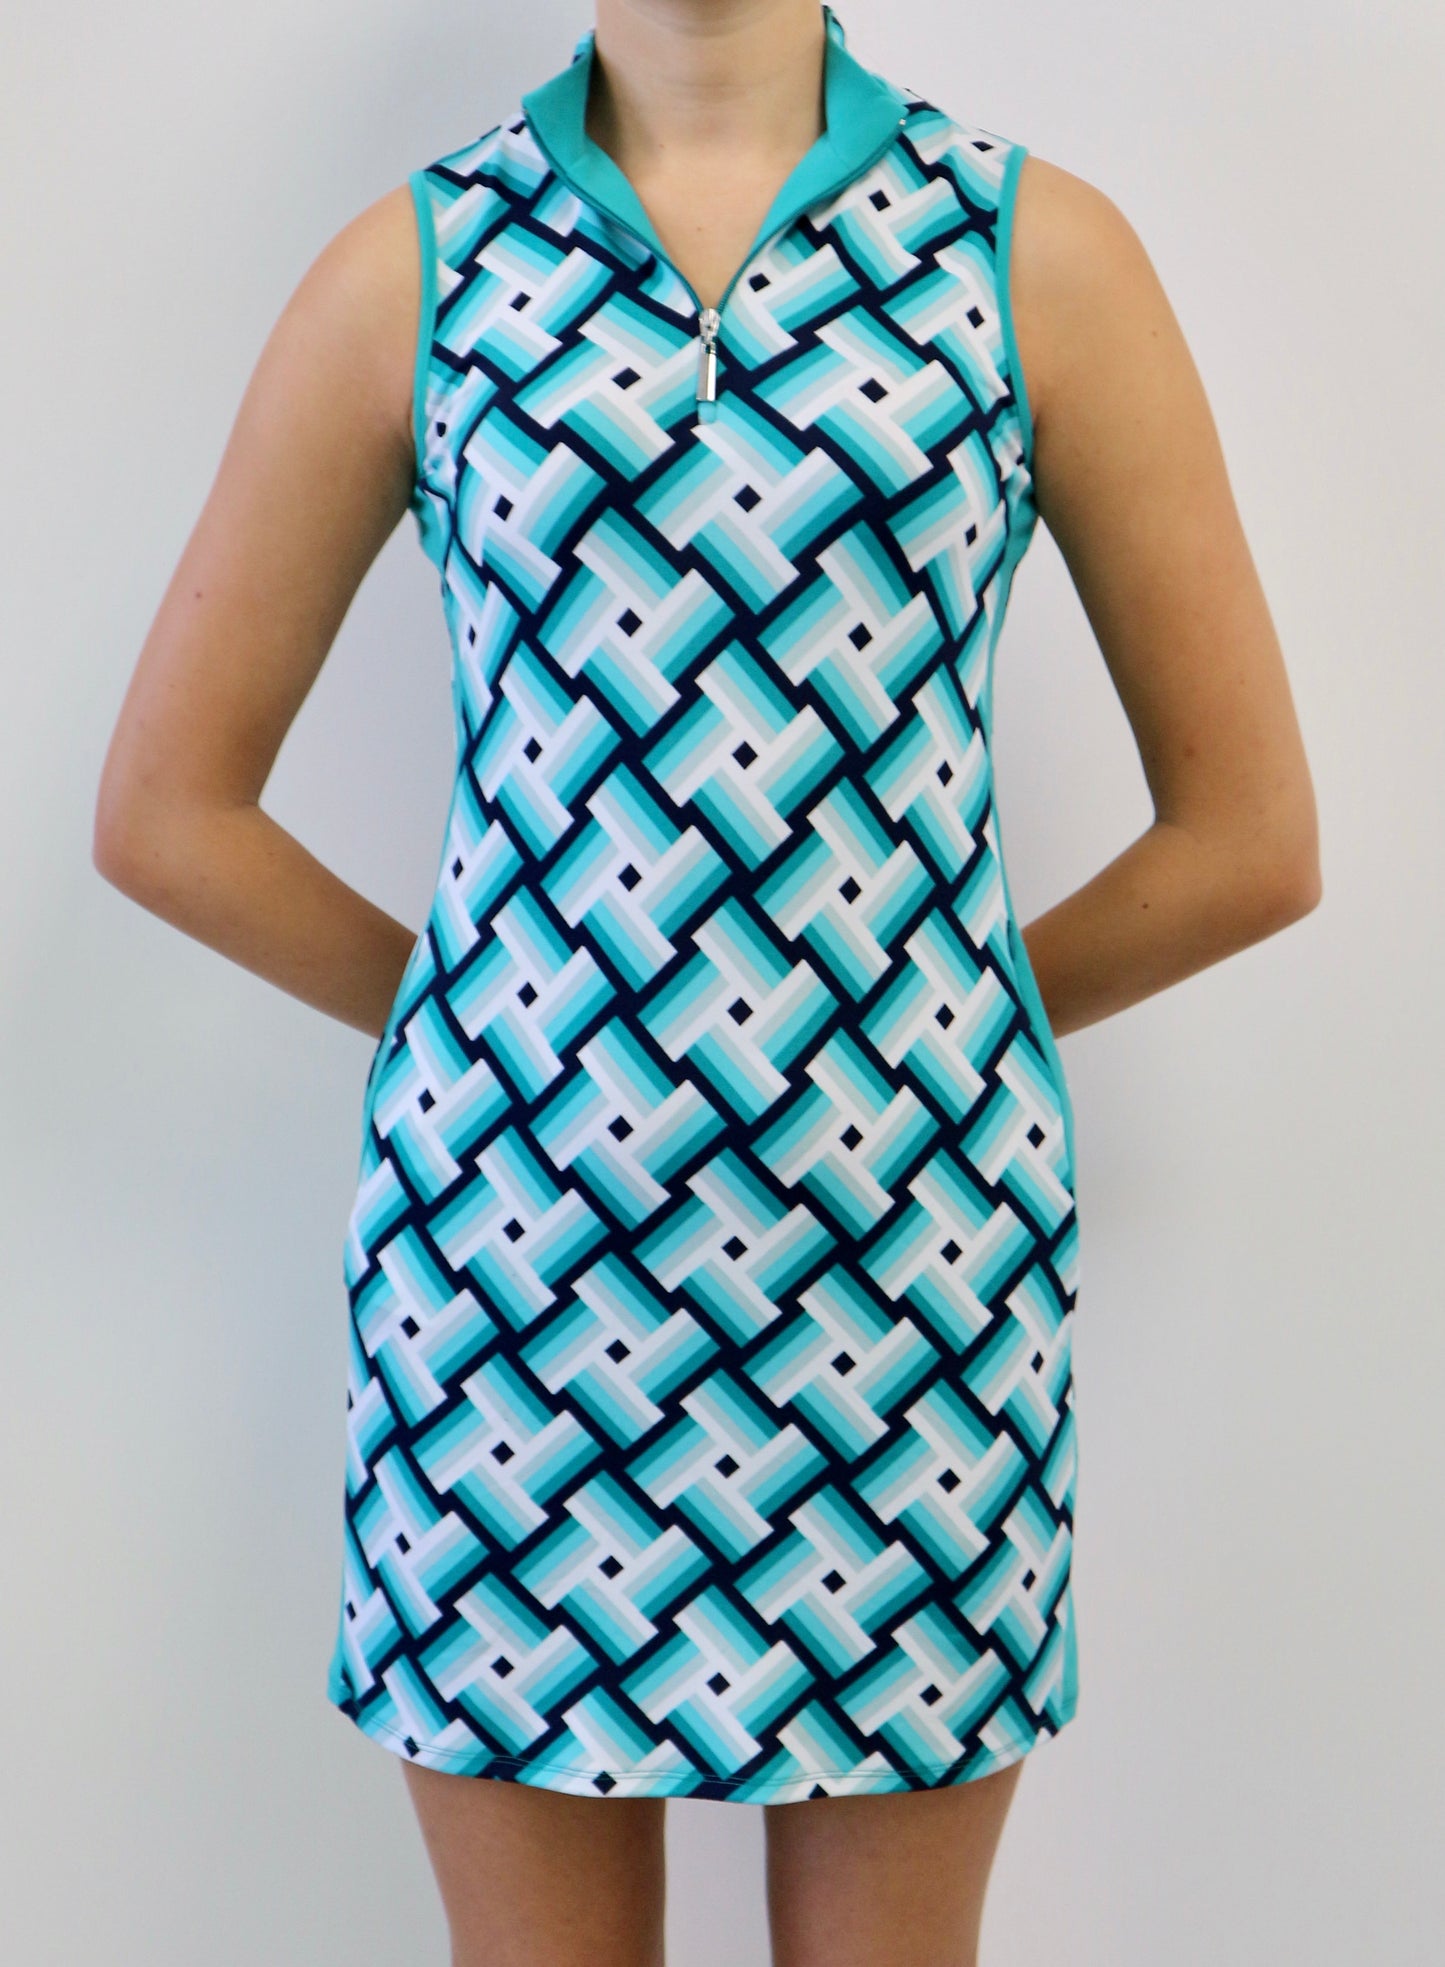 Nora #23802 - Sleeveless Printed Golf Dress - Dexim Golfwear